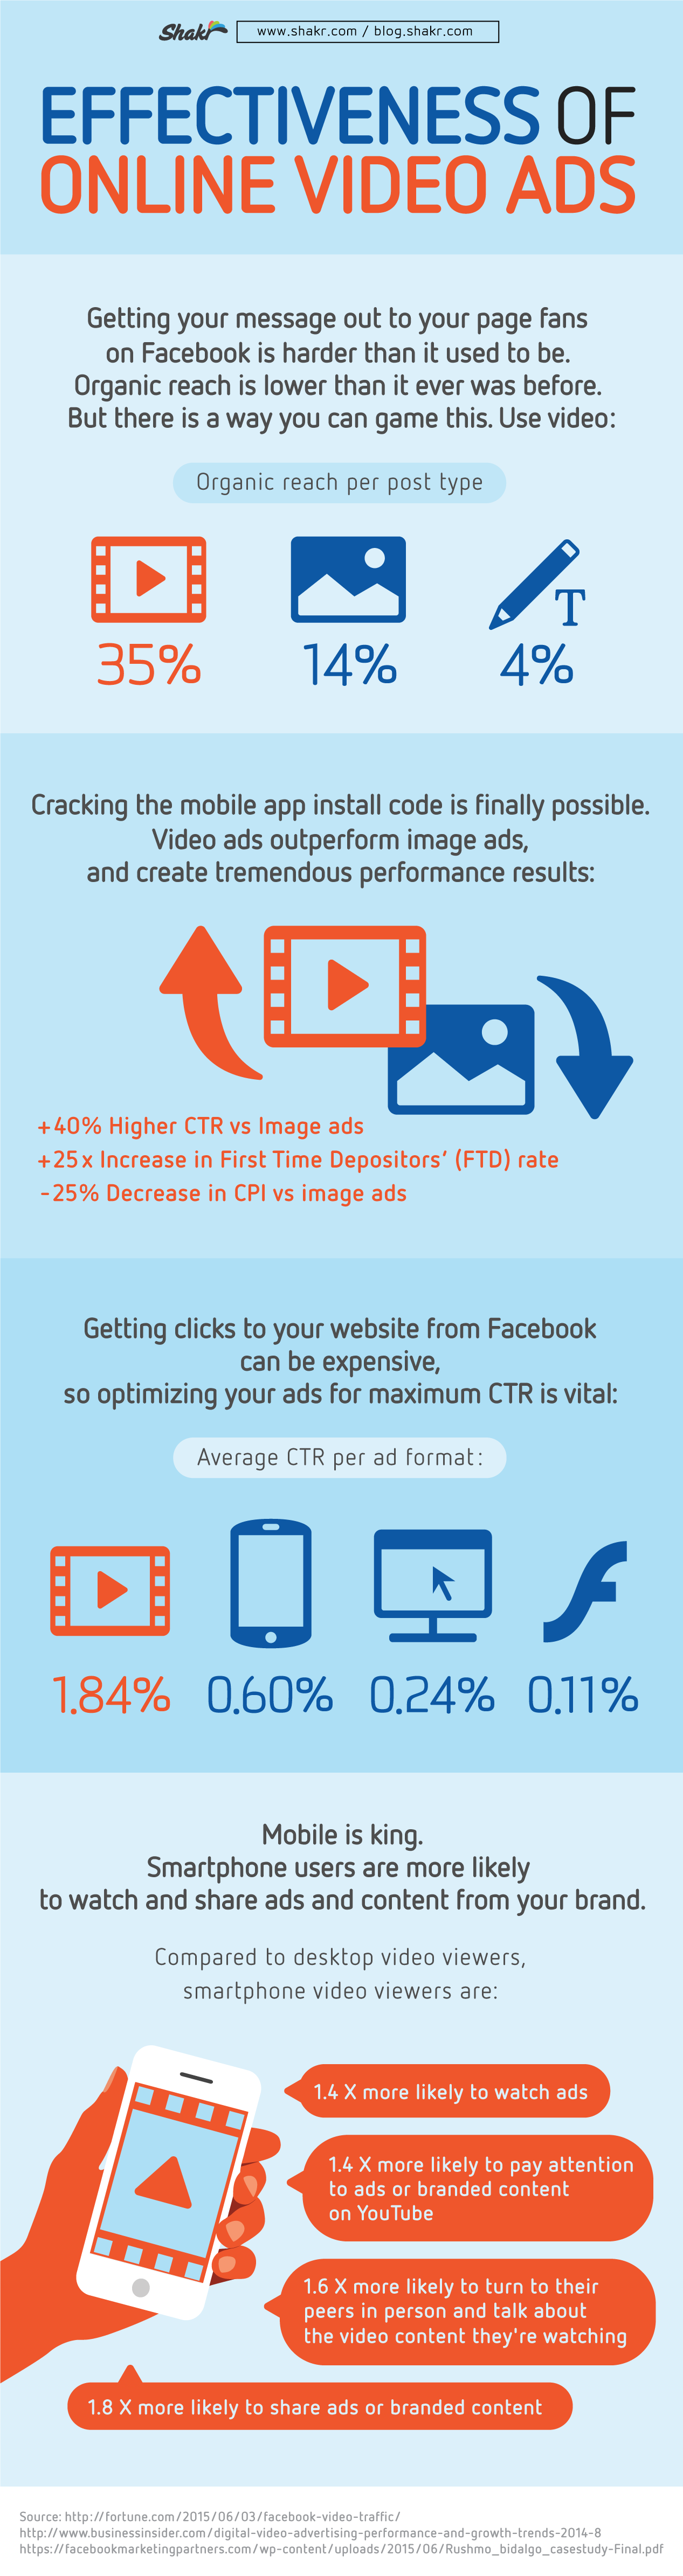 [Infographic] Online Video Ads Effectiveness - Shakr Video Marketing Blog